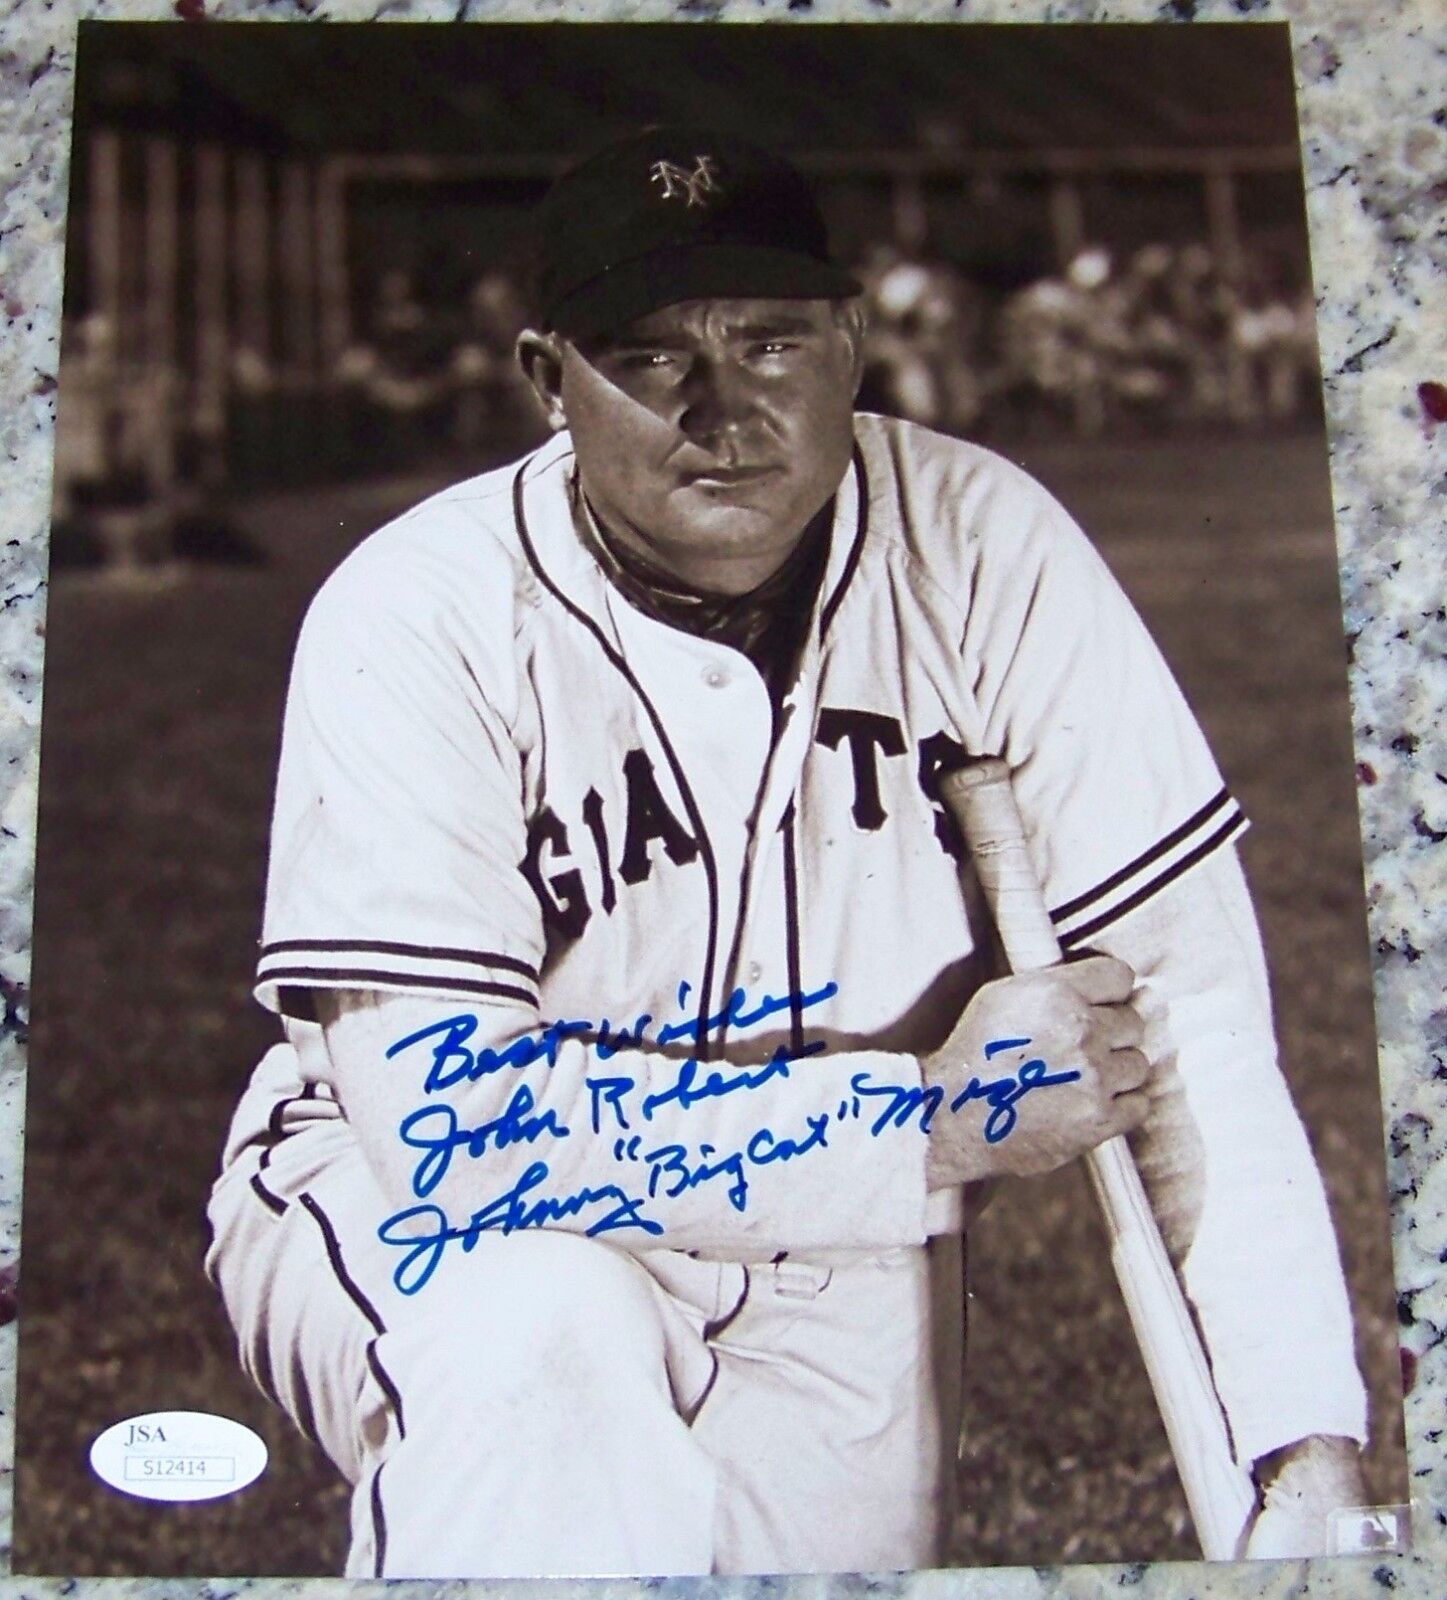 John Robert Johnny Big Cat Mize Signed Autographed 8x10 Baseball Photo Poster painting JSA COA!